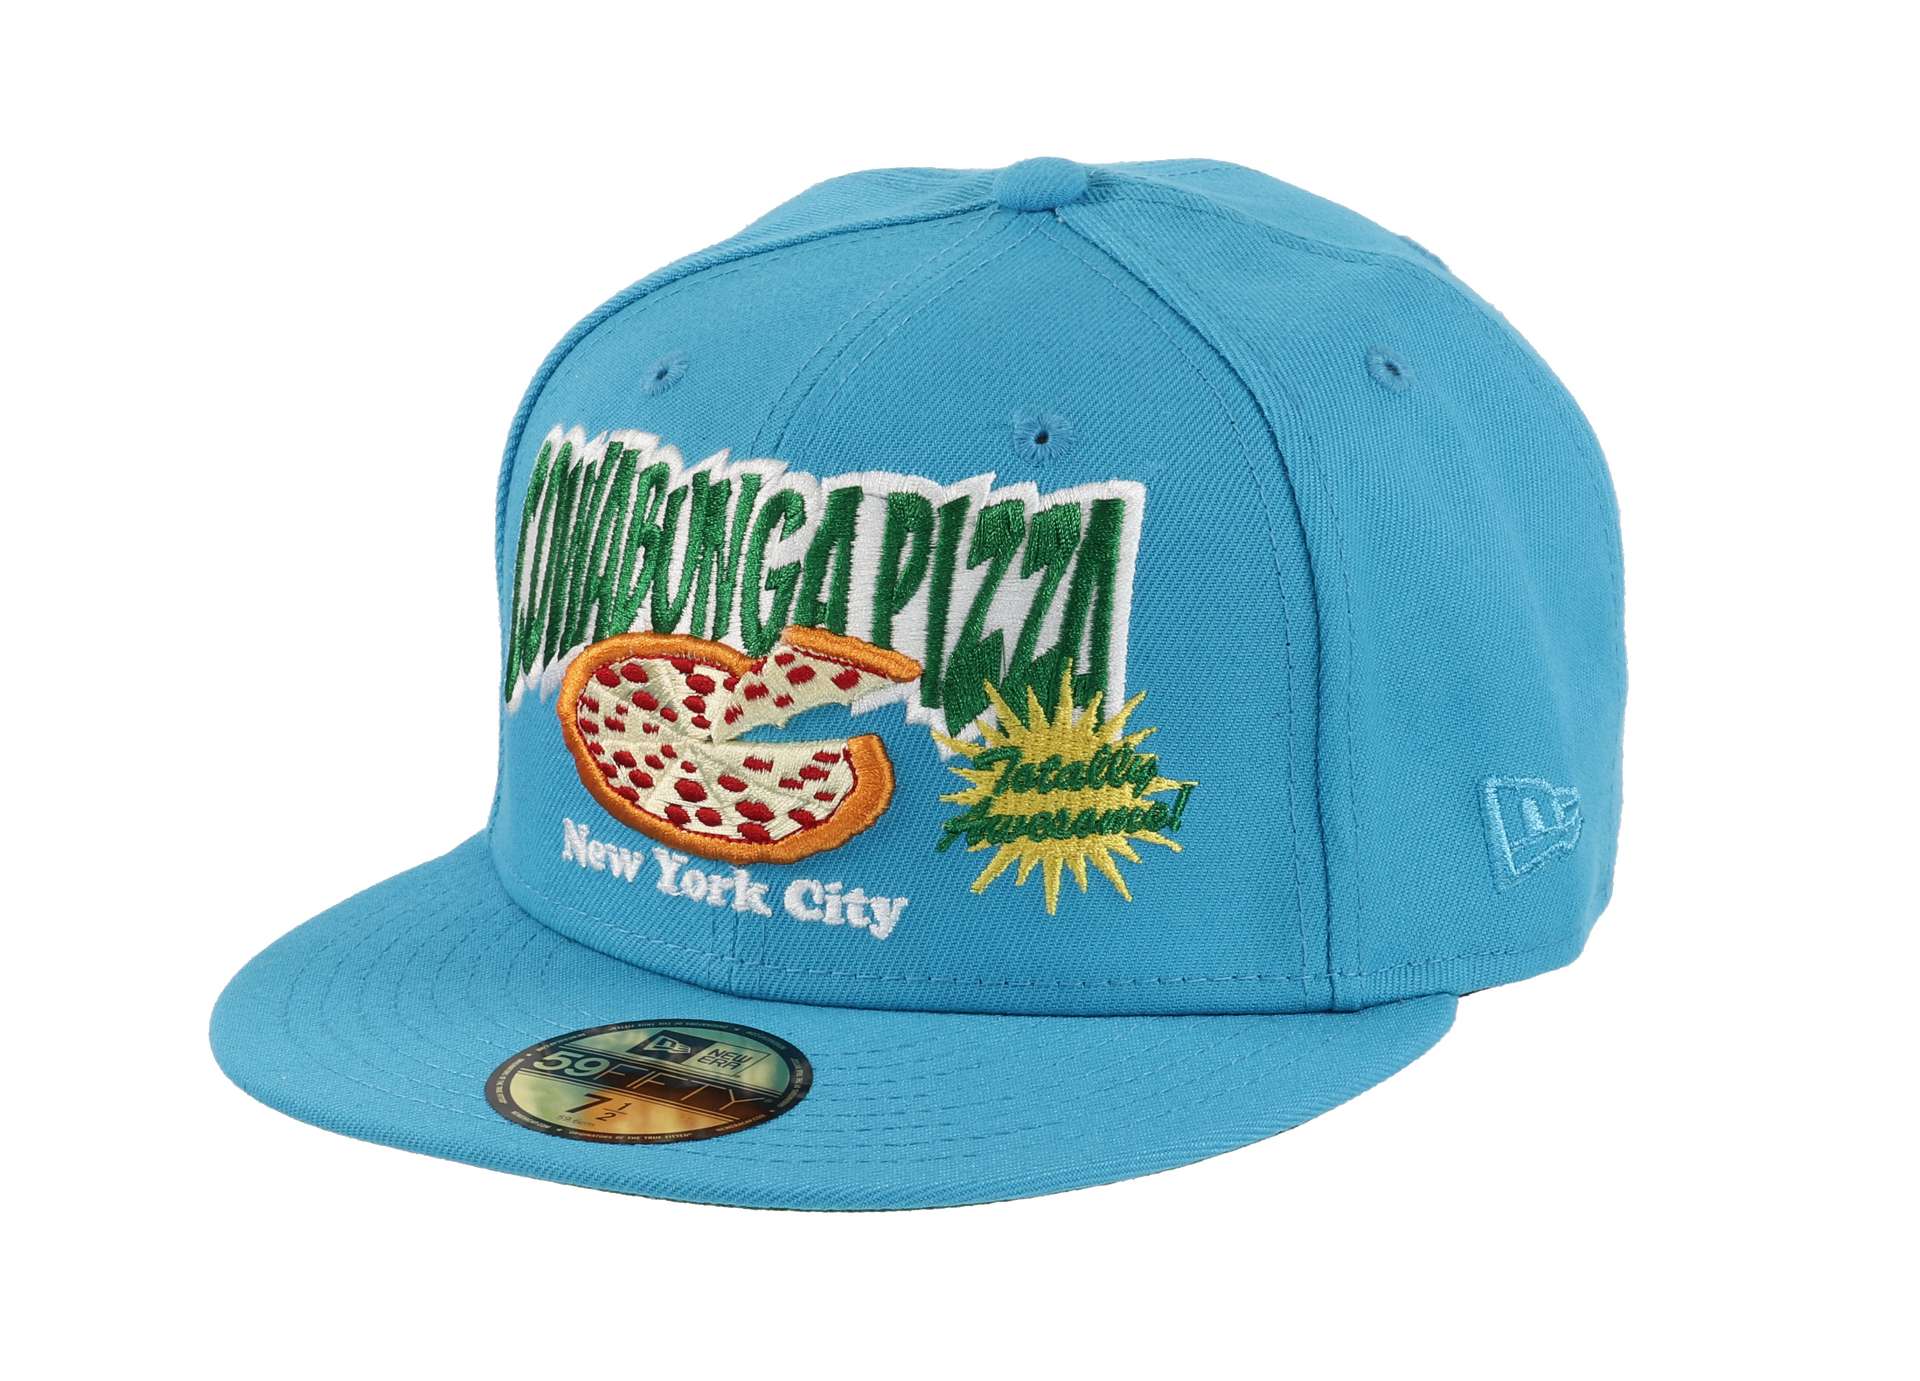 Cowabunga Pizza Ninja Turtles Island Blue TMNT Edition 59Fifty Cap New Era